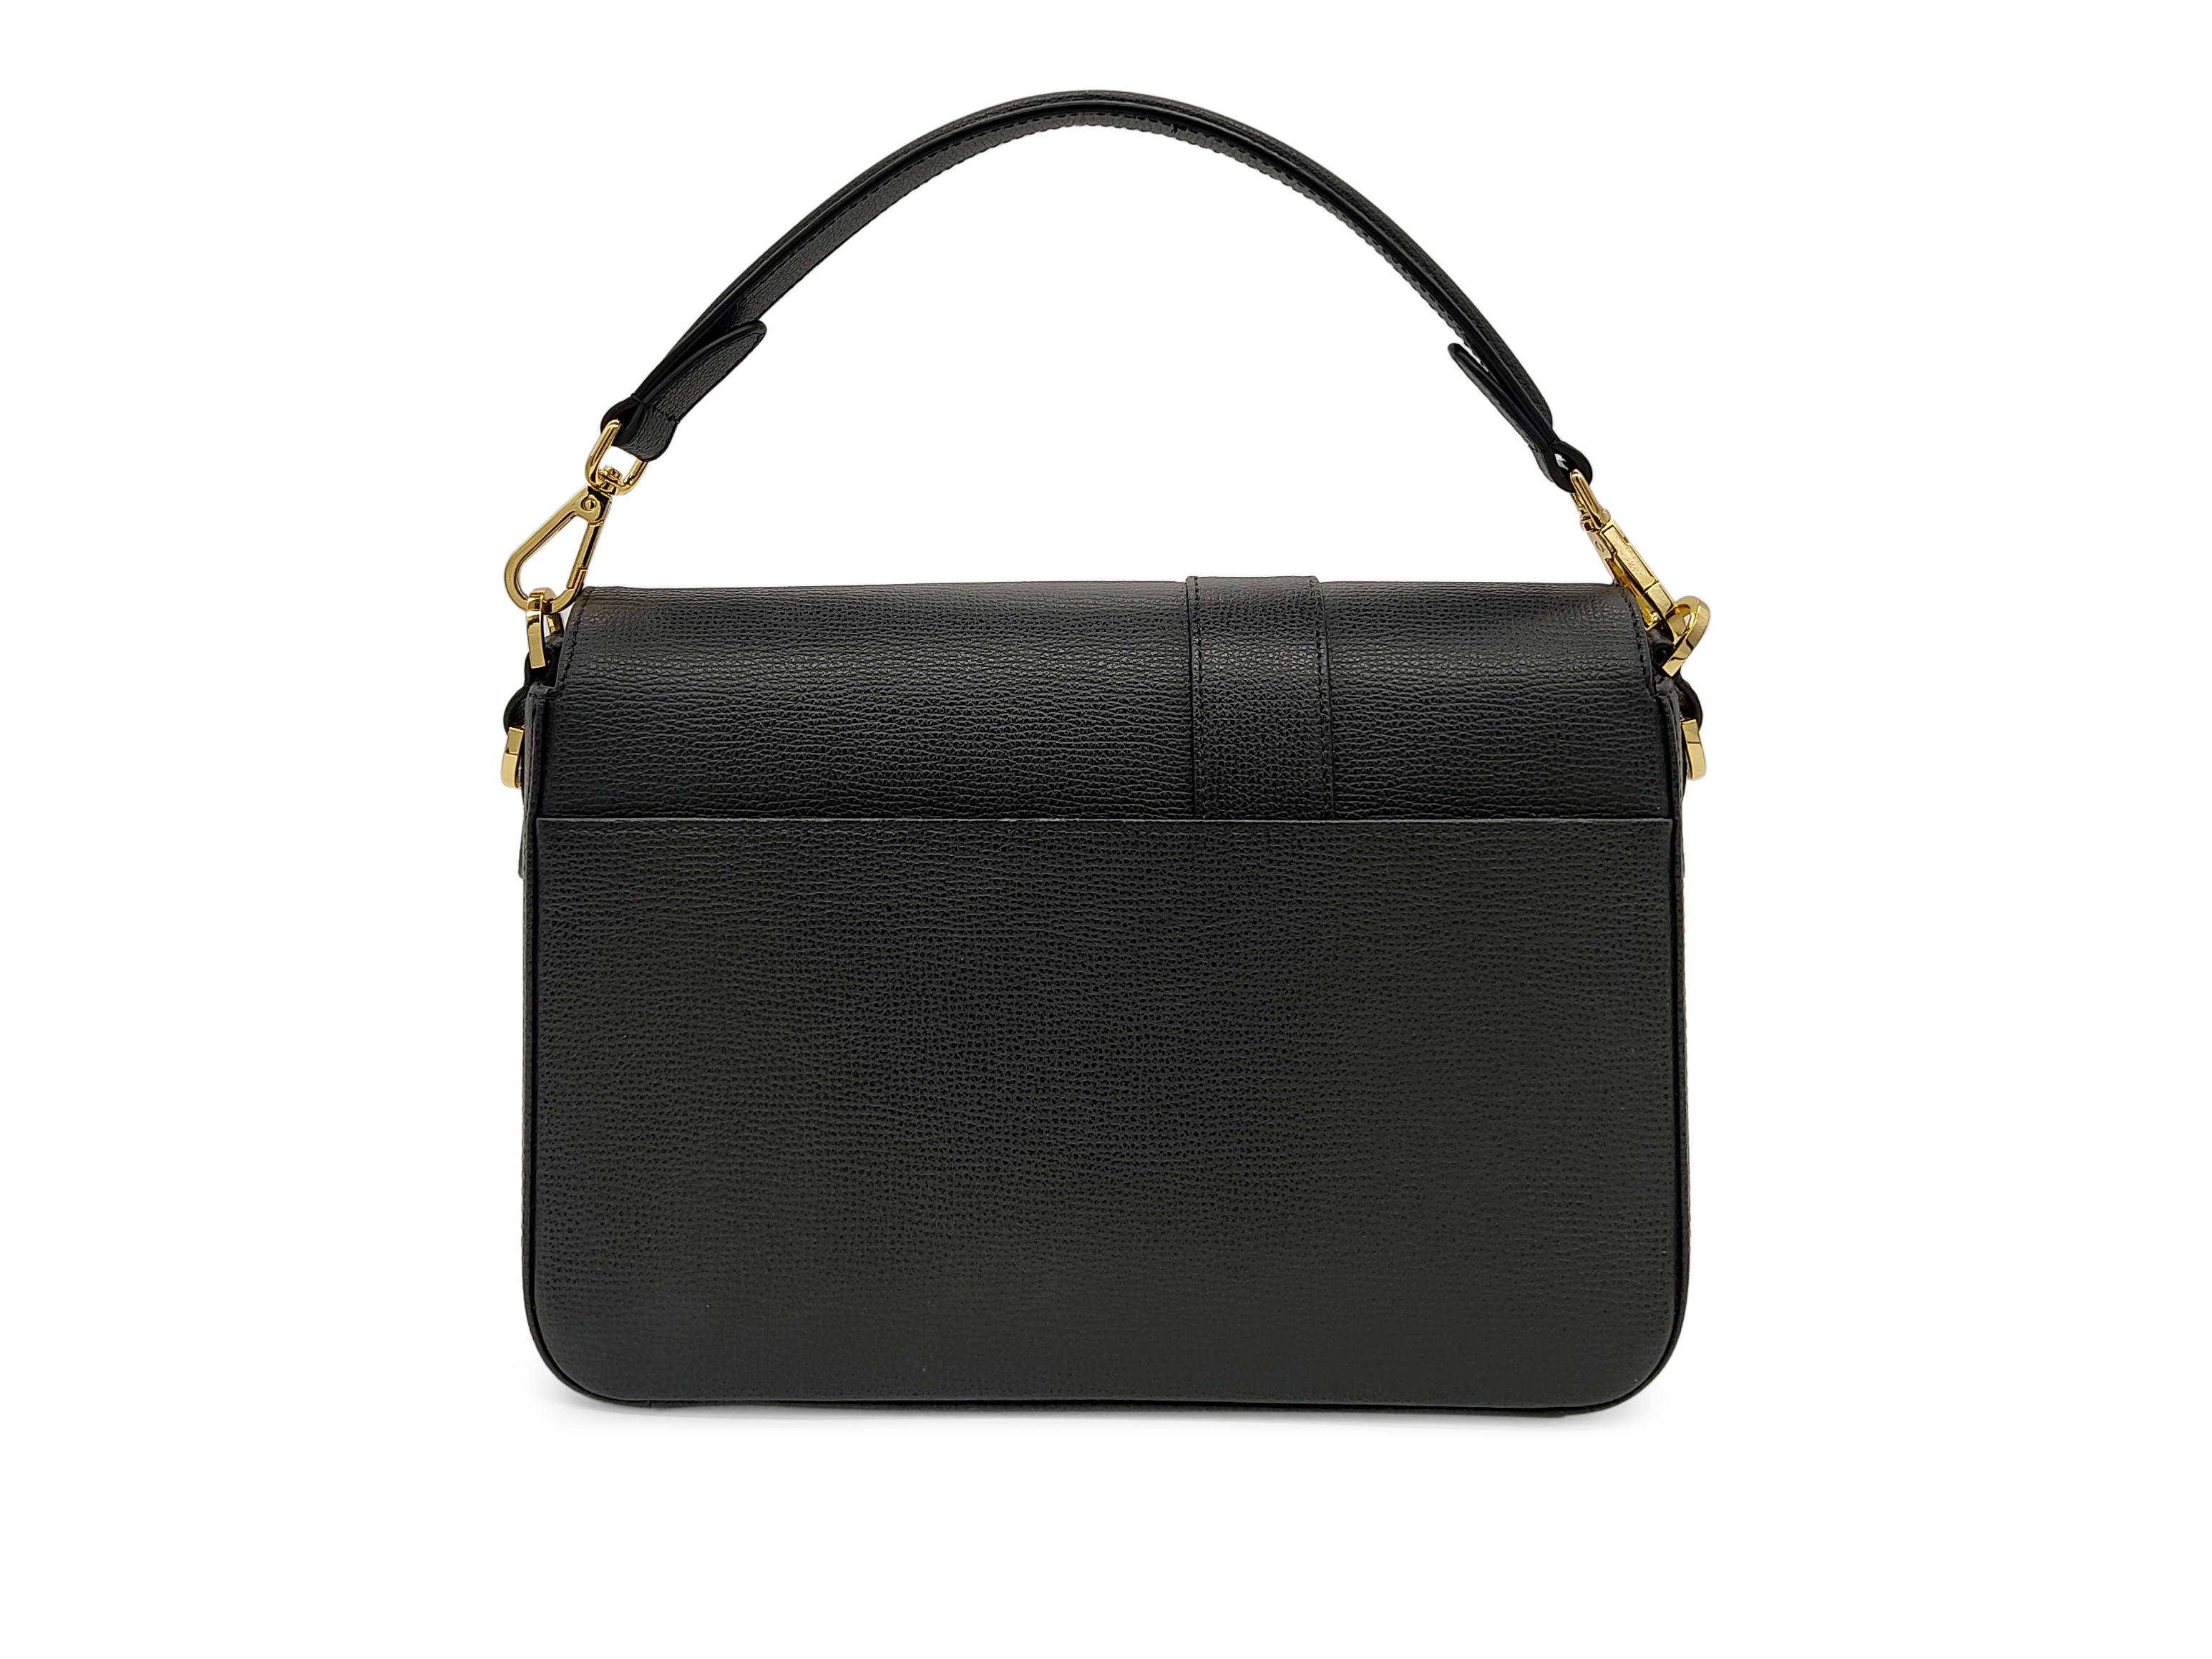 Buy LV Hold Me top-handle bag black @ $330.00